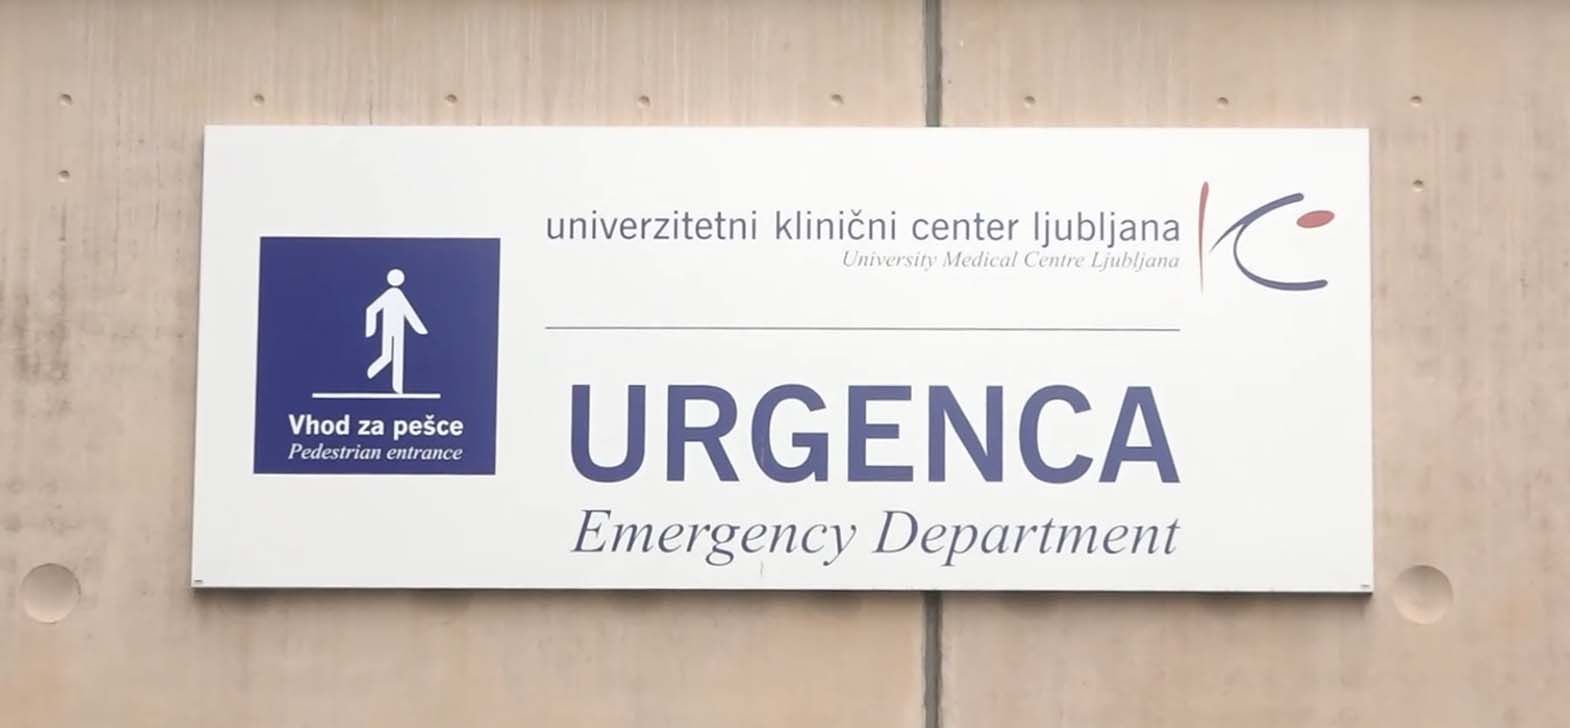 Urgenca UKC Ljubljana